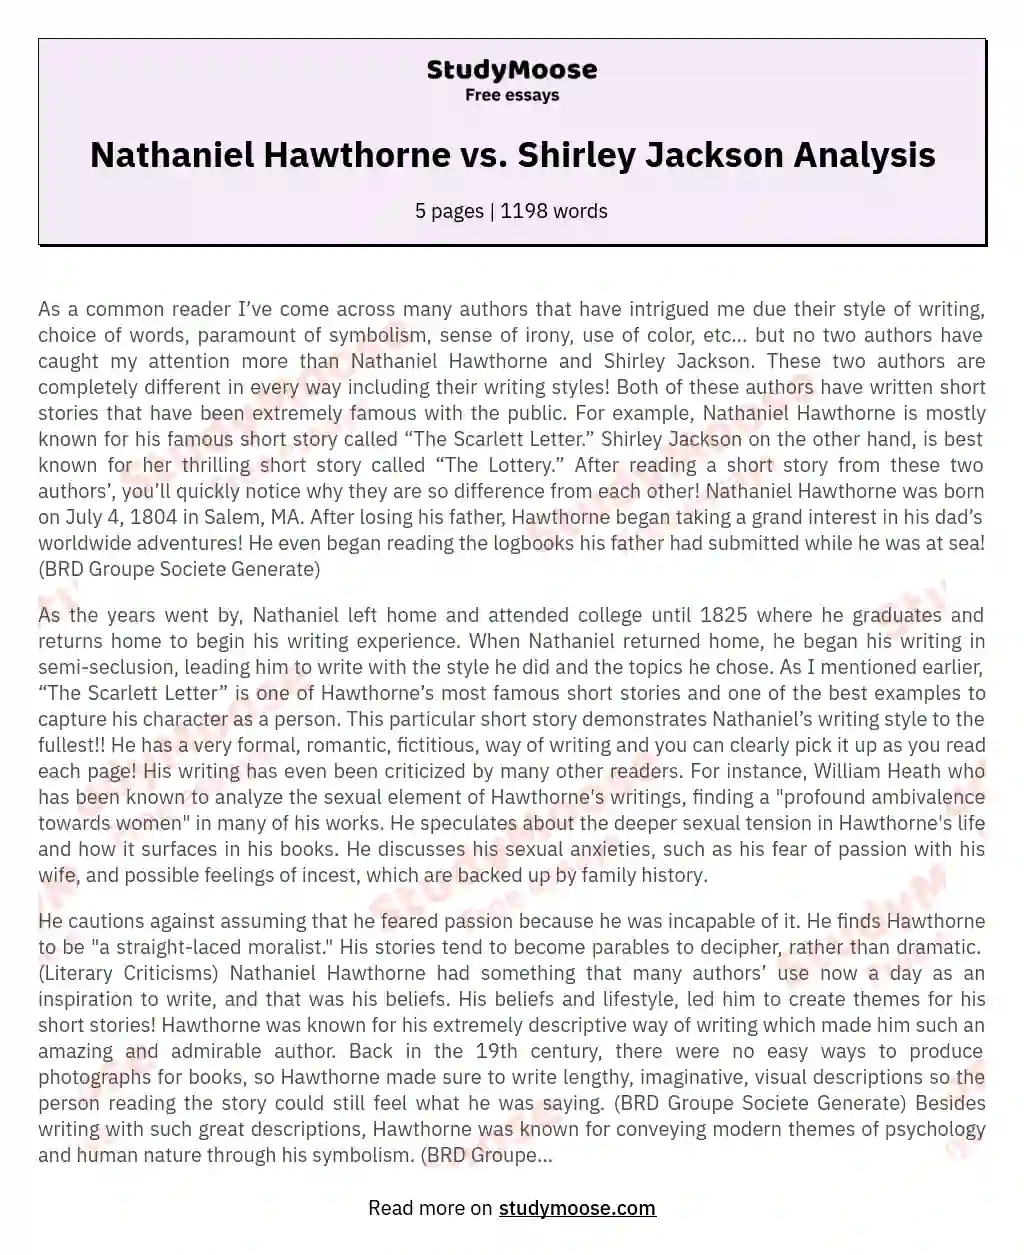 Nathaniel Hawthorne vs. Shirley Jackson Analysis essay